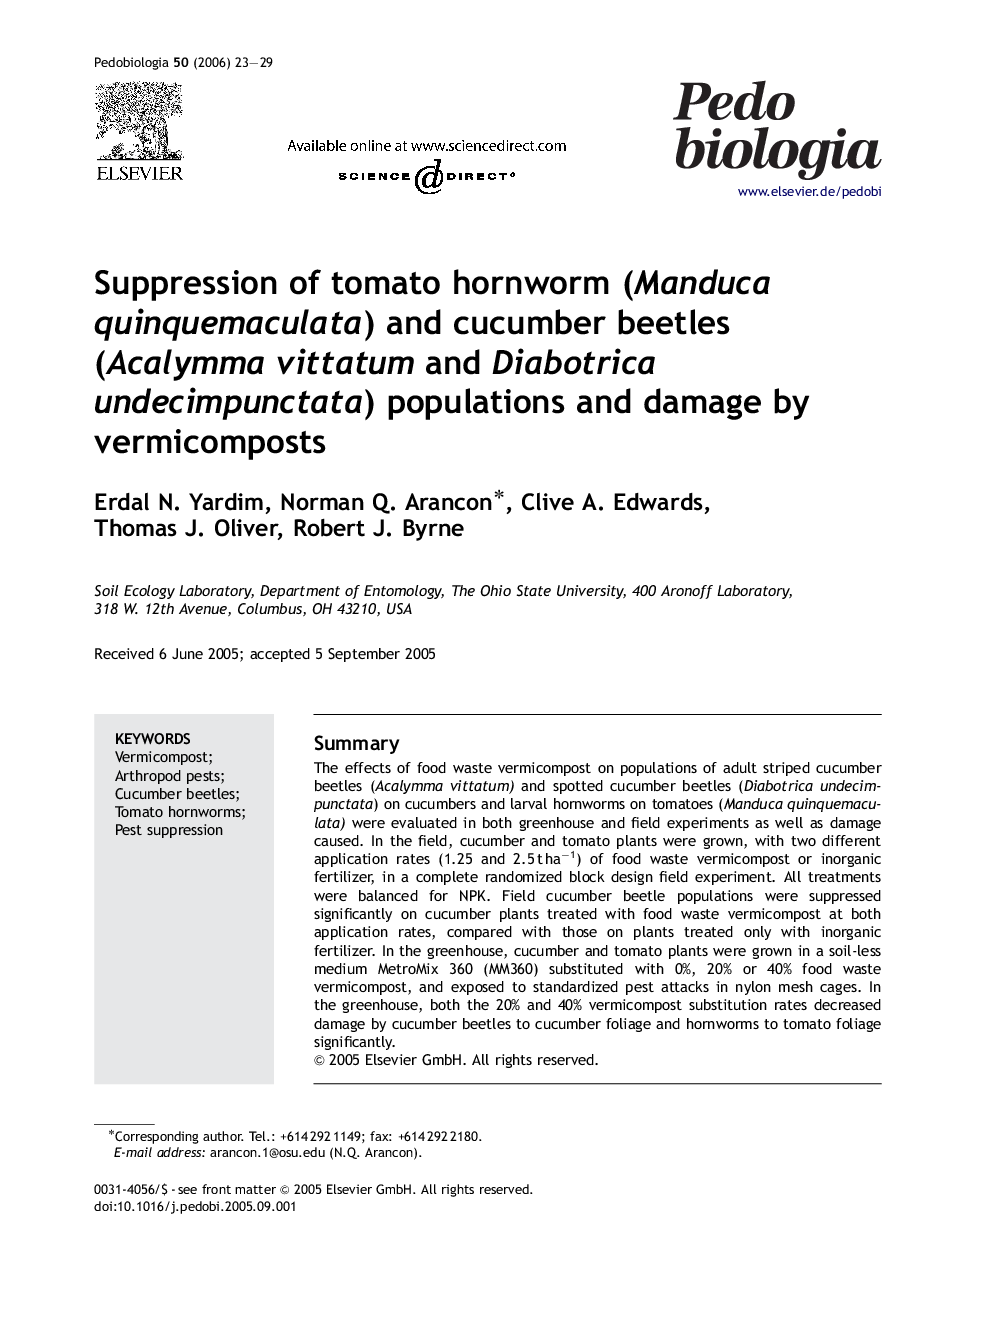 Suppression of tomato hornworm (Manduca quinquemaculata) and cucumber beetles (Acalymma vittatum and Diabotrica undecimpunctata) populations and damage by vermicomposts